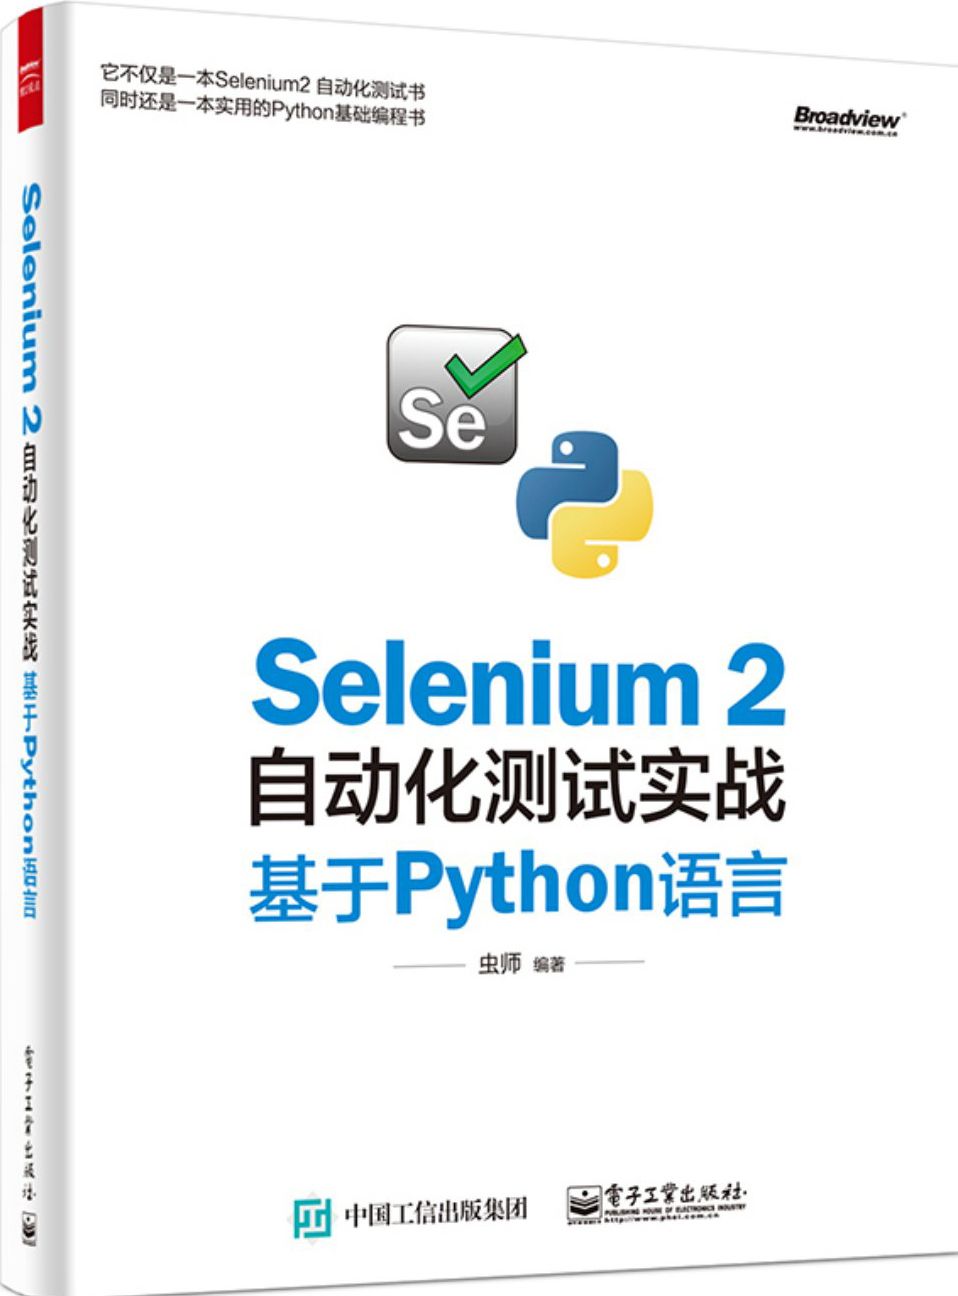 Selenium 2自动化测试实战:基于Python语言